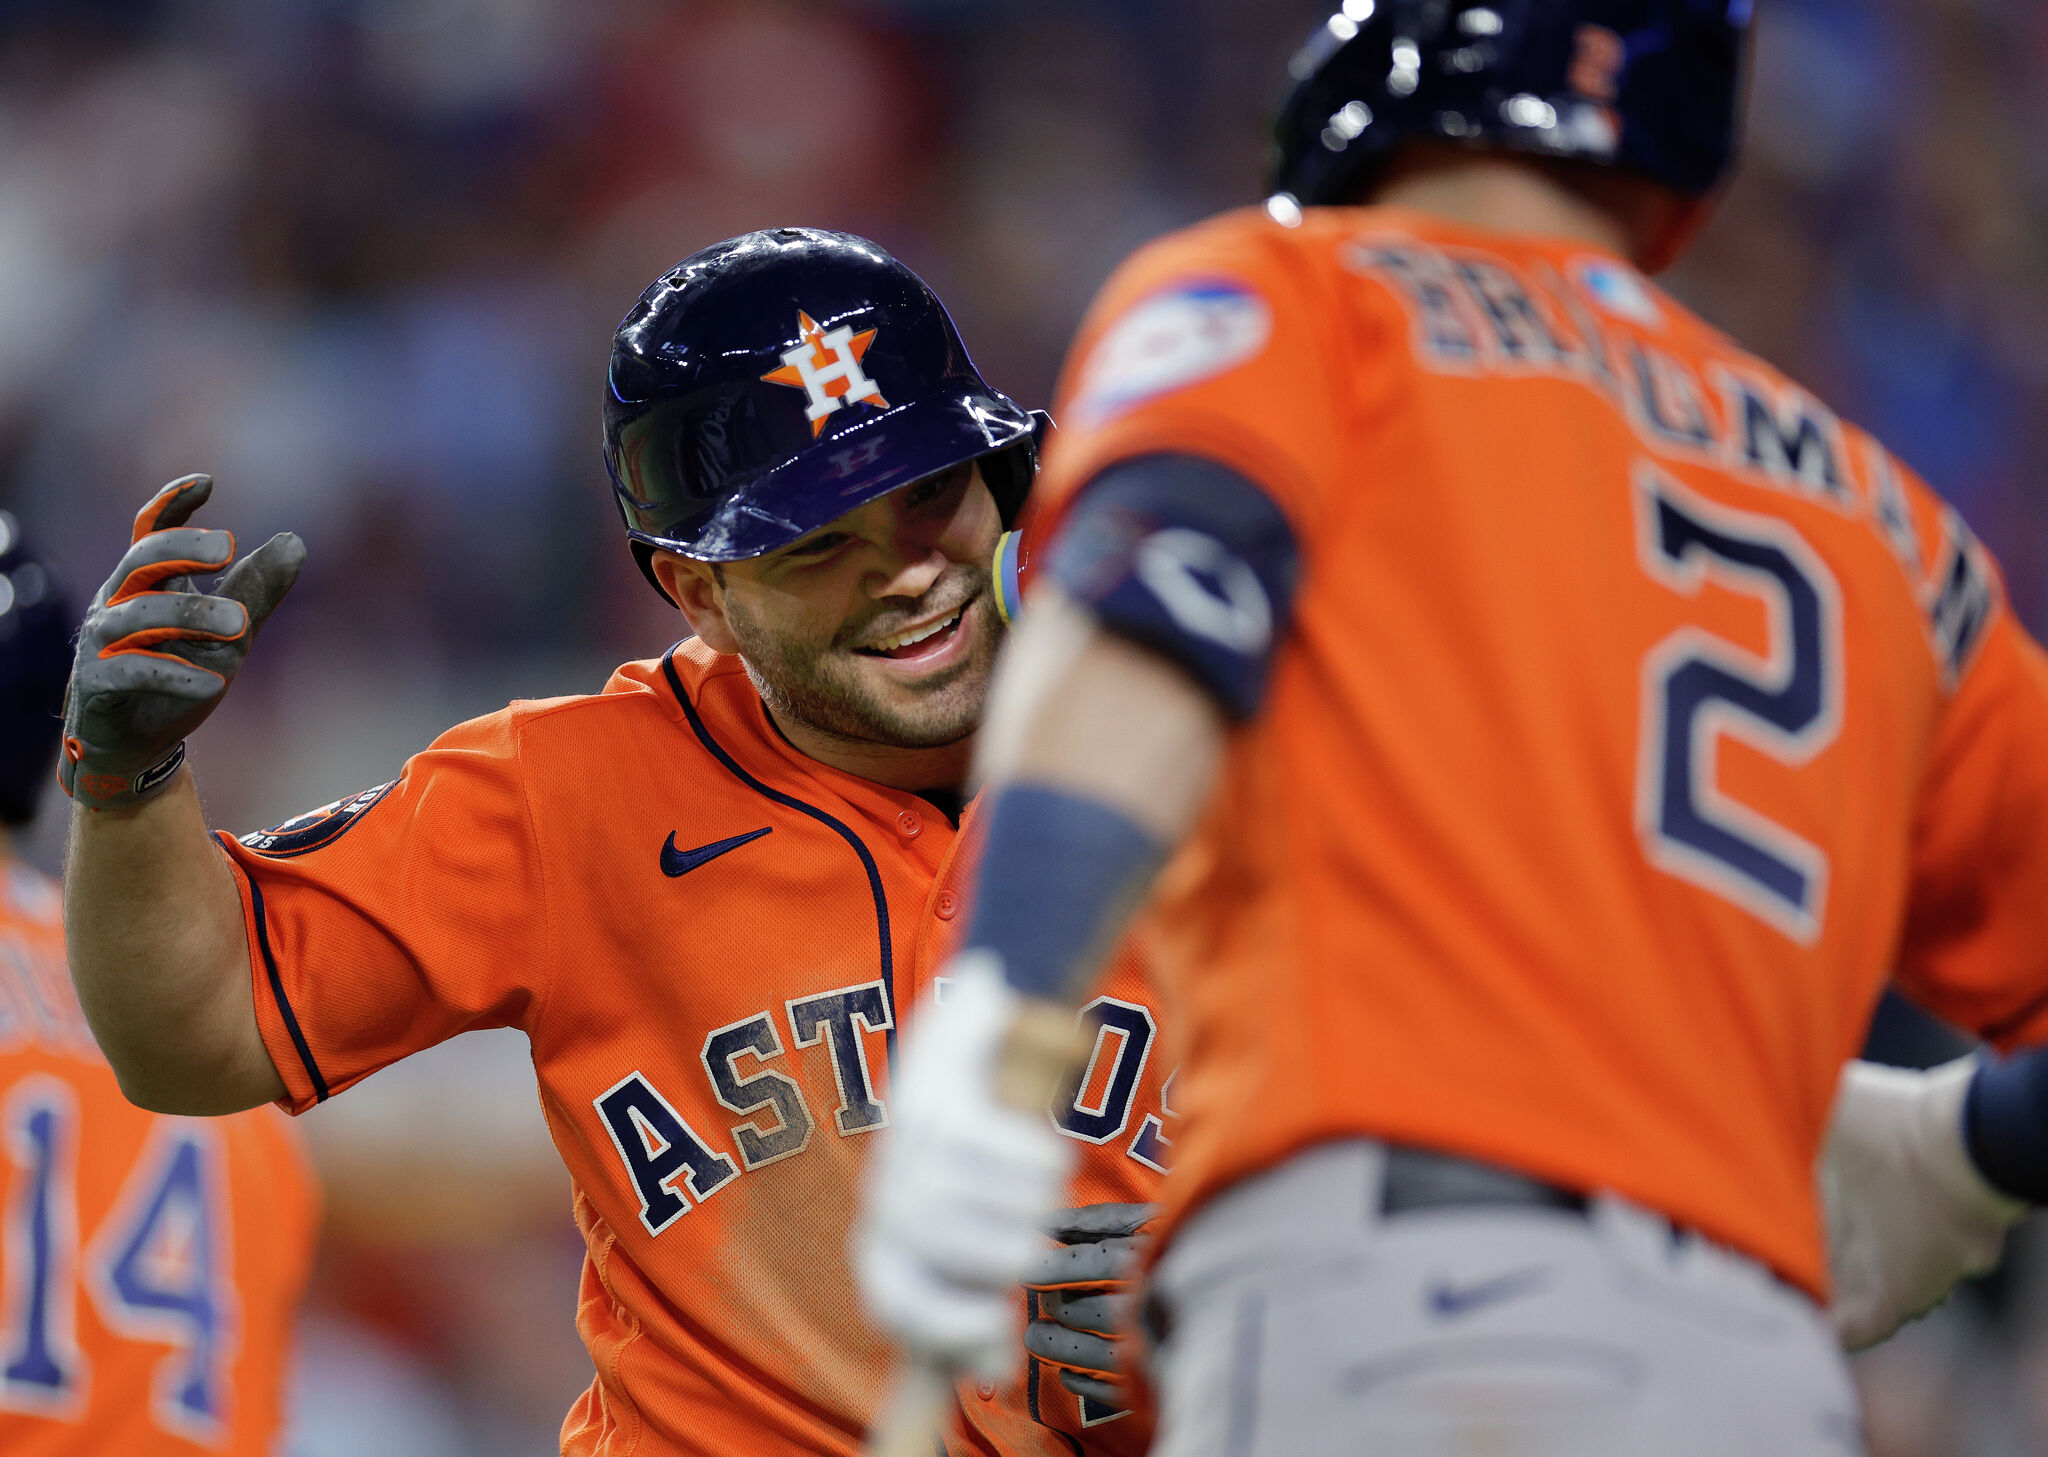 Carlos Correa praises for former Astros teammate after ALDS